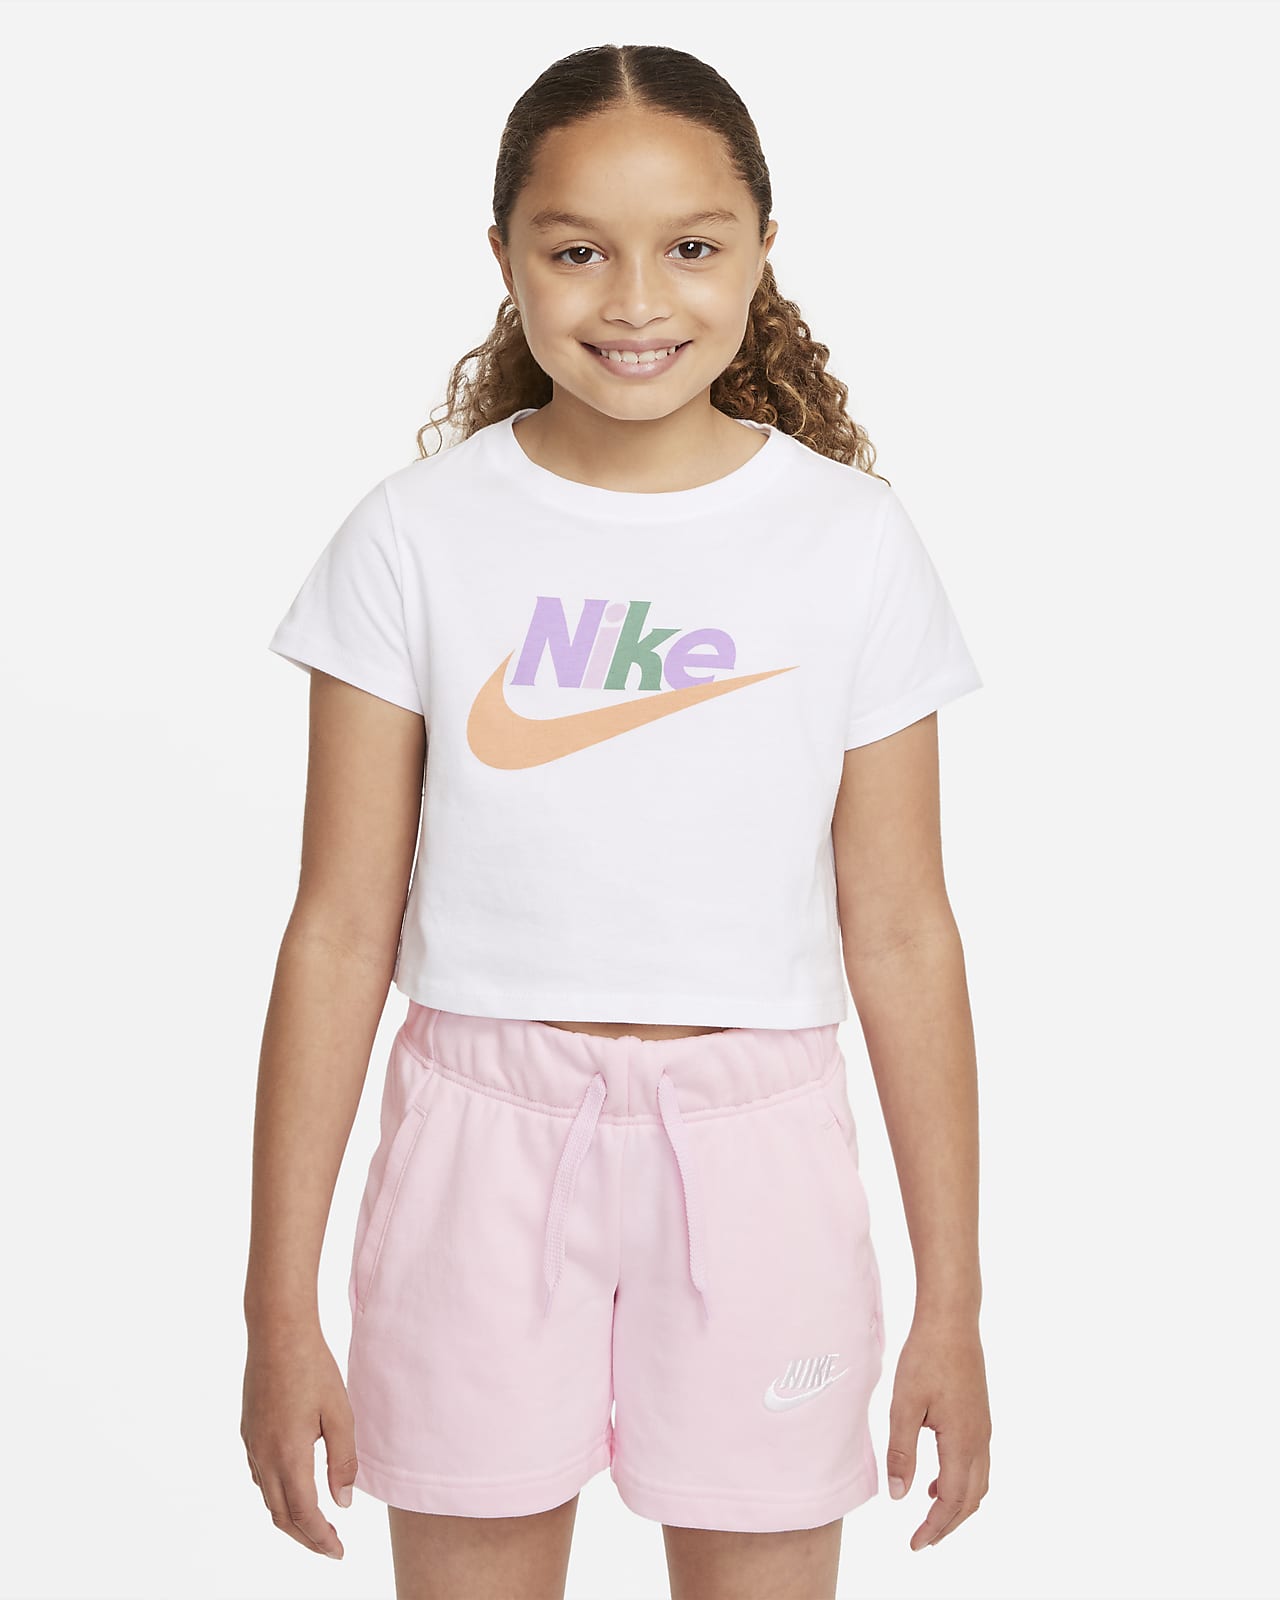 girls shirts for kids